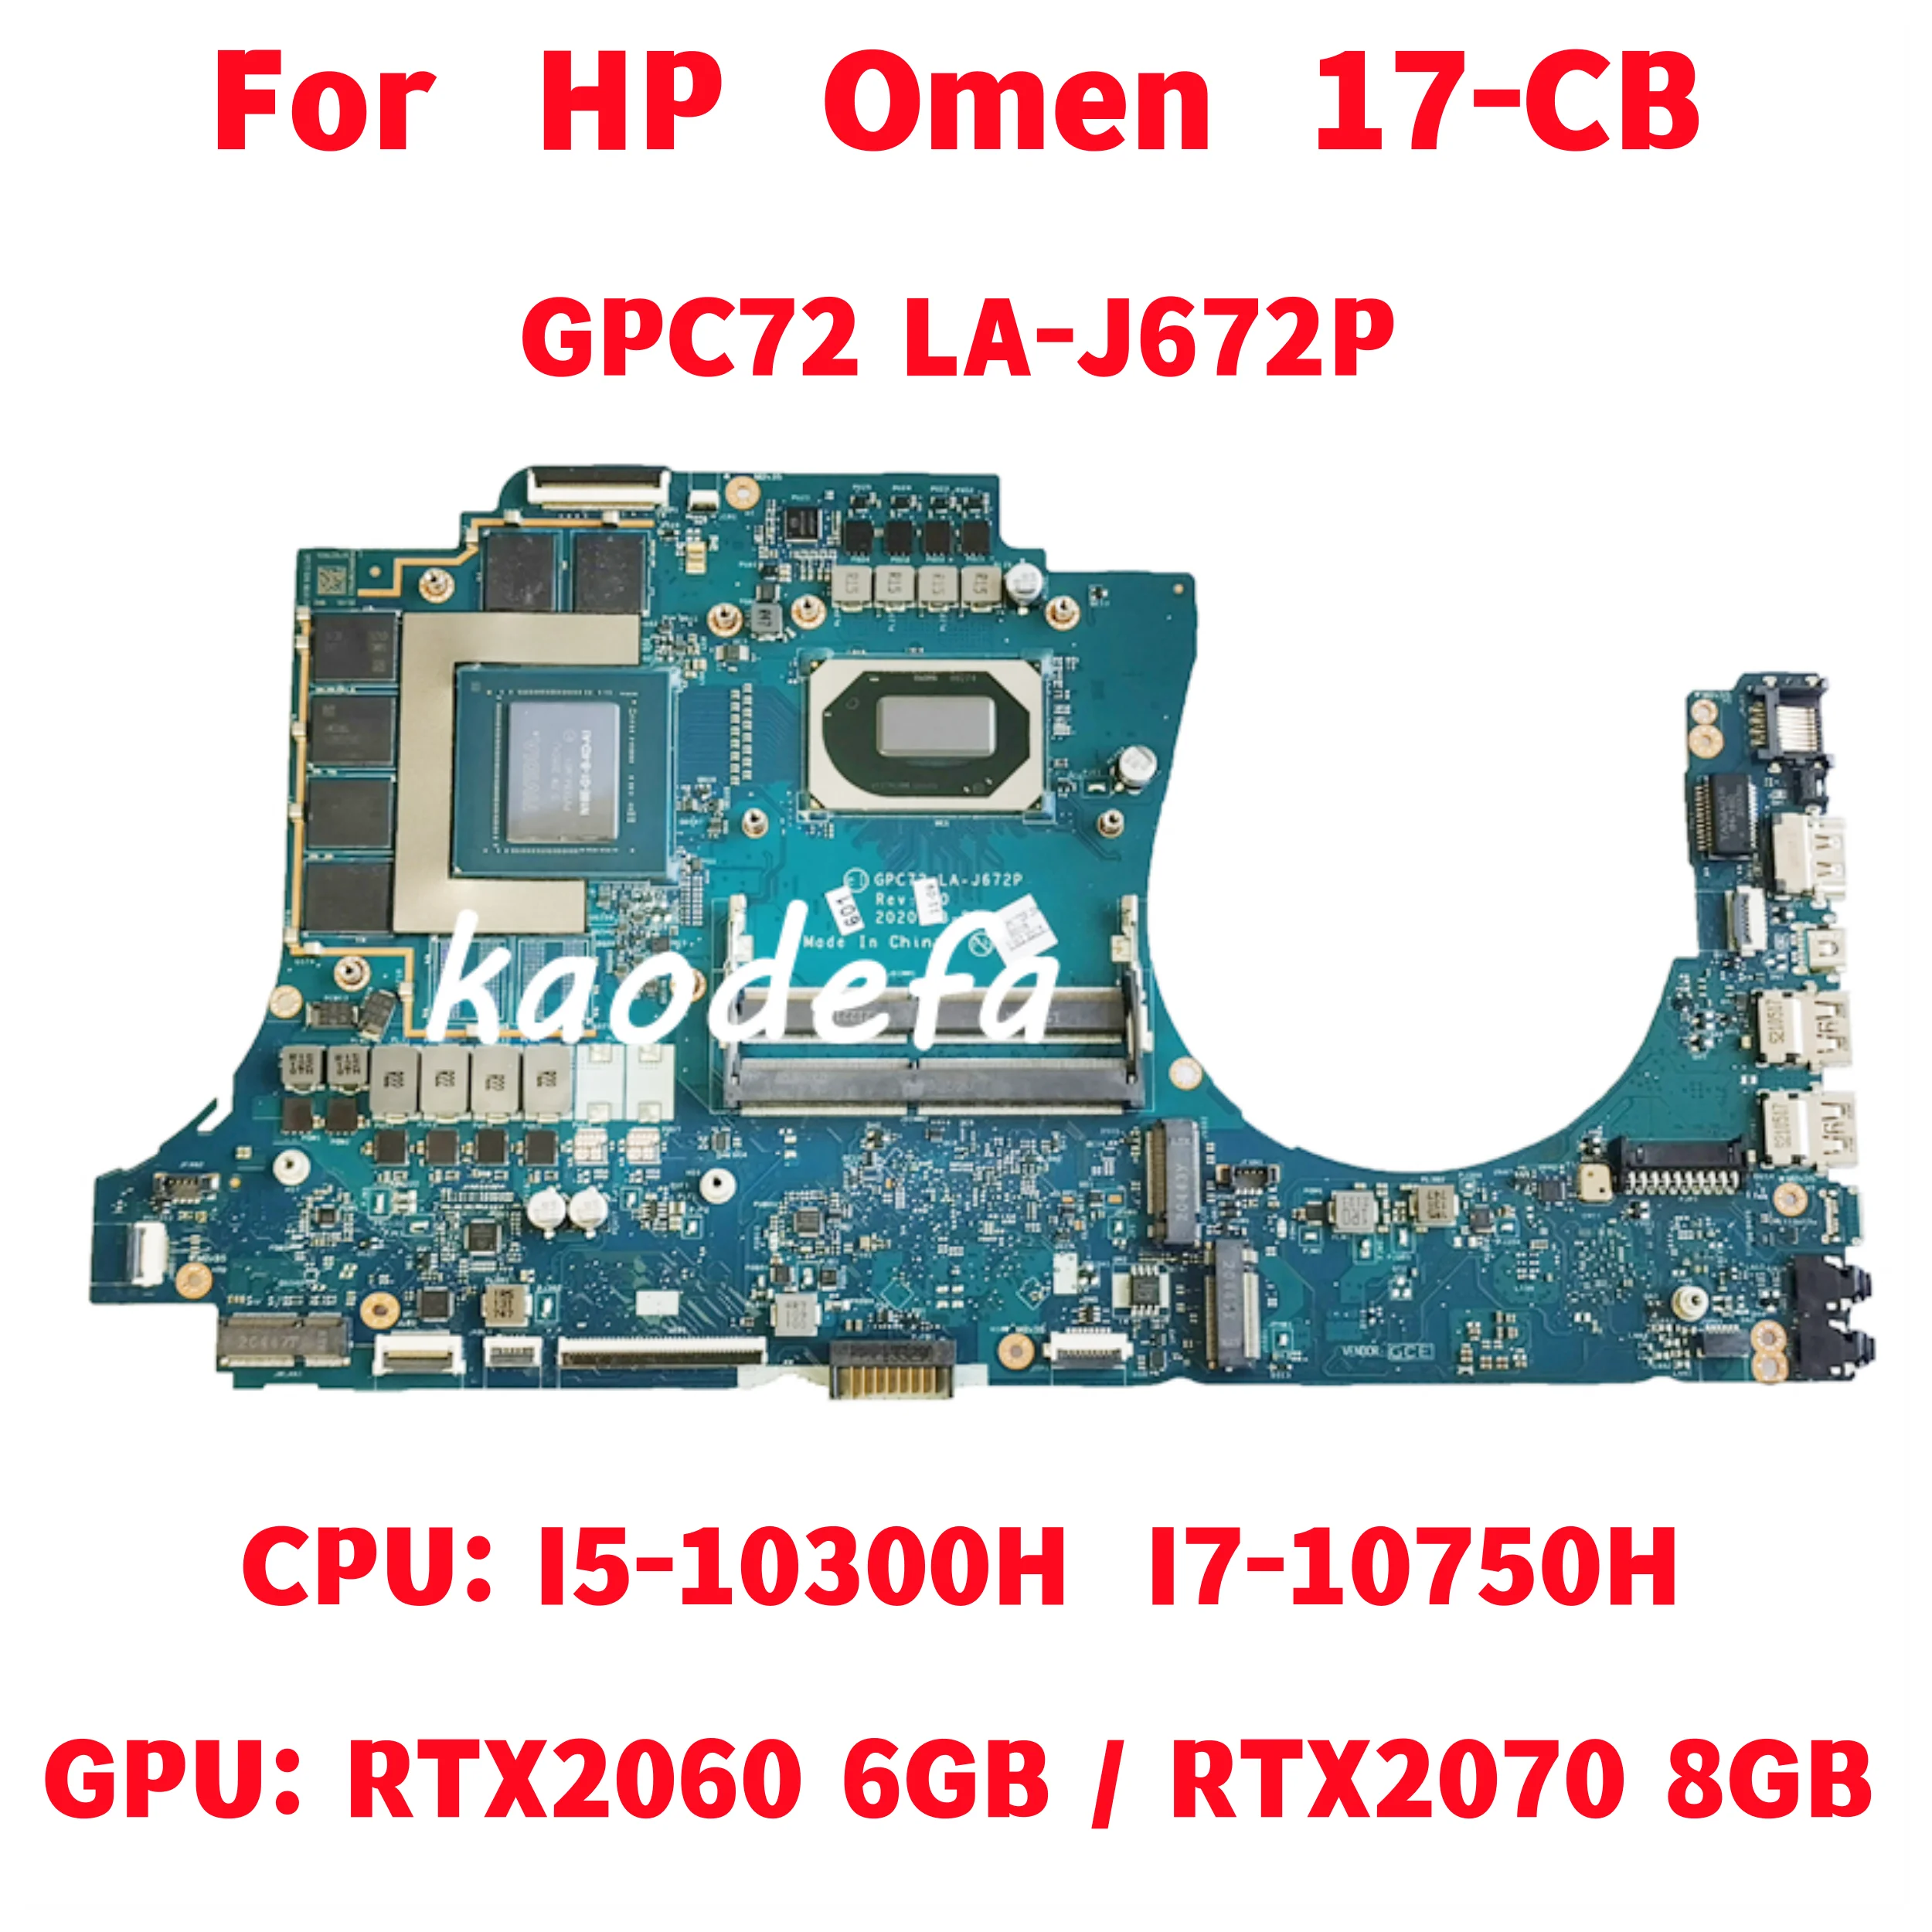 

Системная плата GPC72 для ноутбука HP Omen 17-CB, материнская плата для ноутбука с зеркальным графическим процессором: RTX2060, 6 ГБ/RTX2070, 8 ГБ, тест 100%, ОК